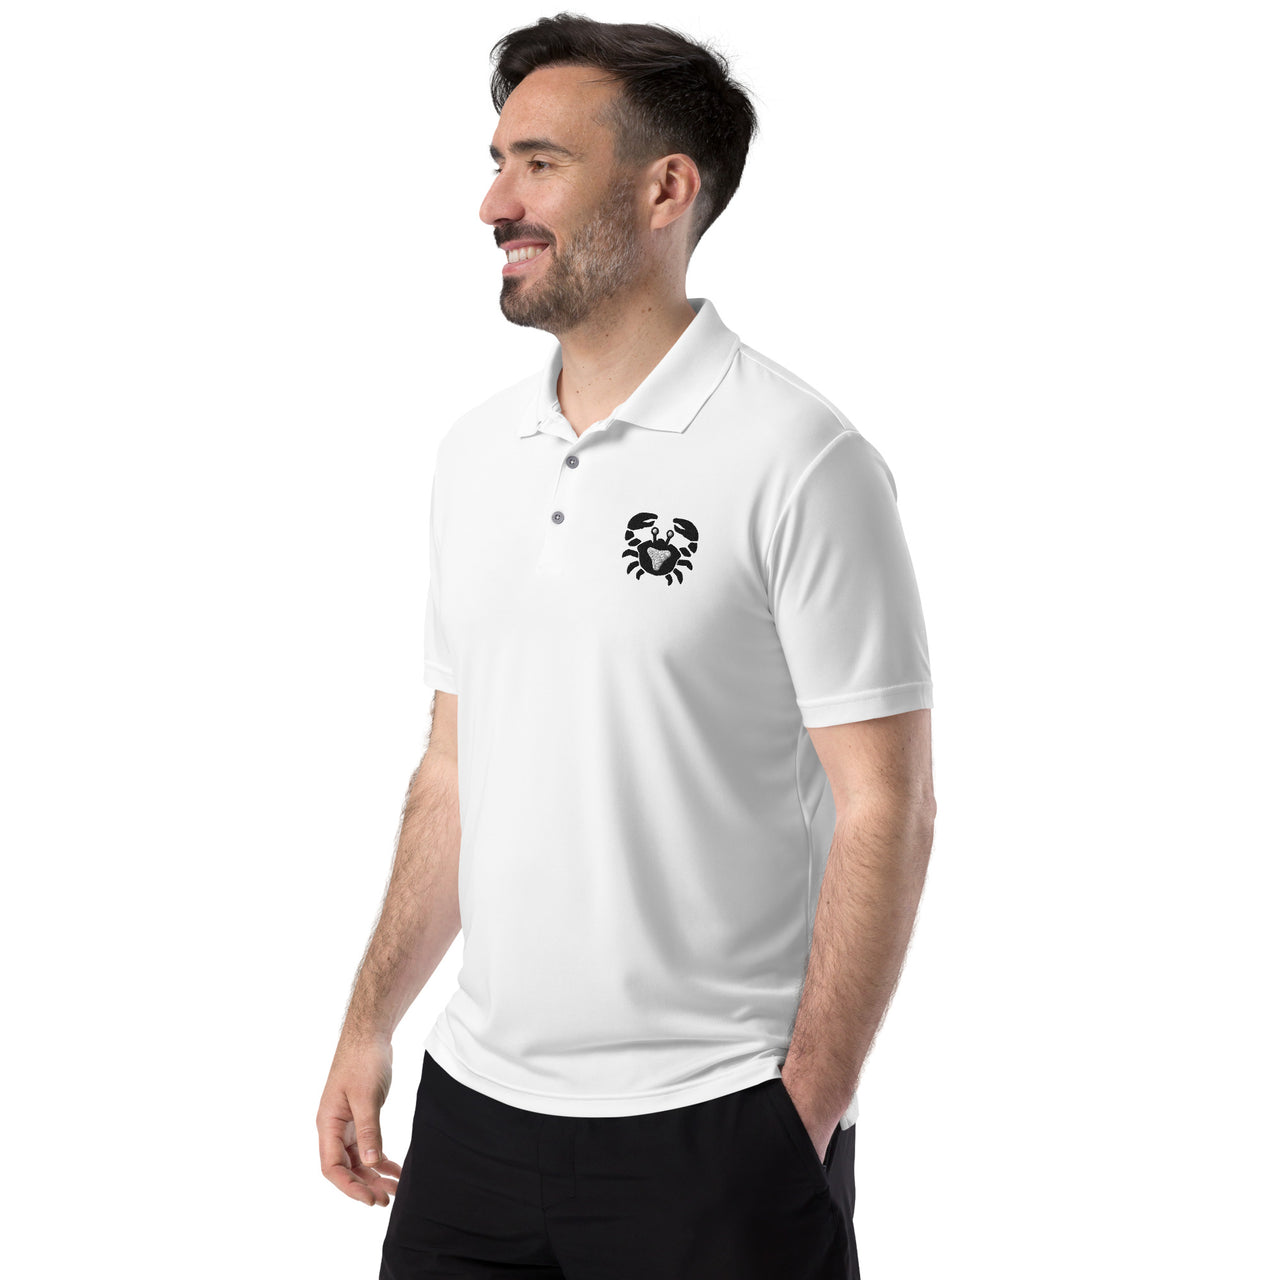 Men's Cancer White Polo Shirt